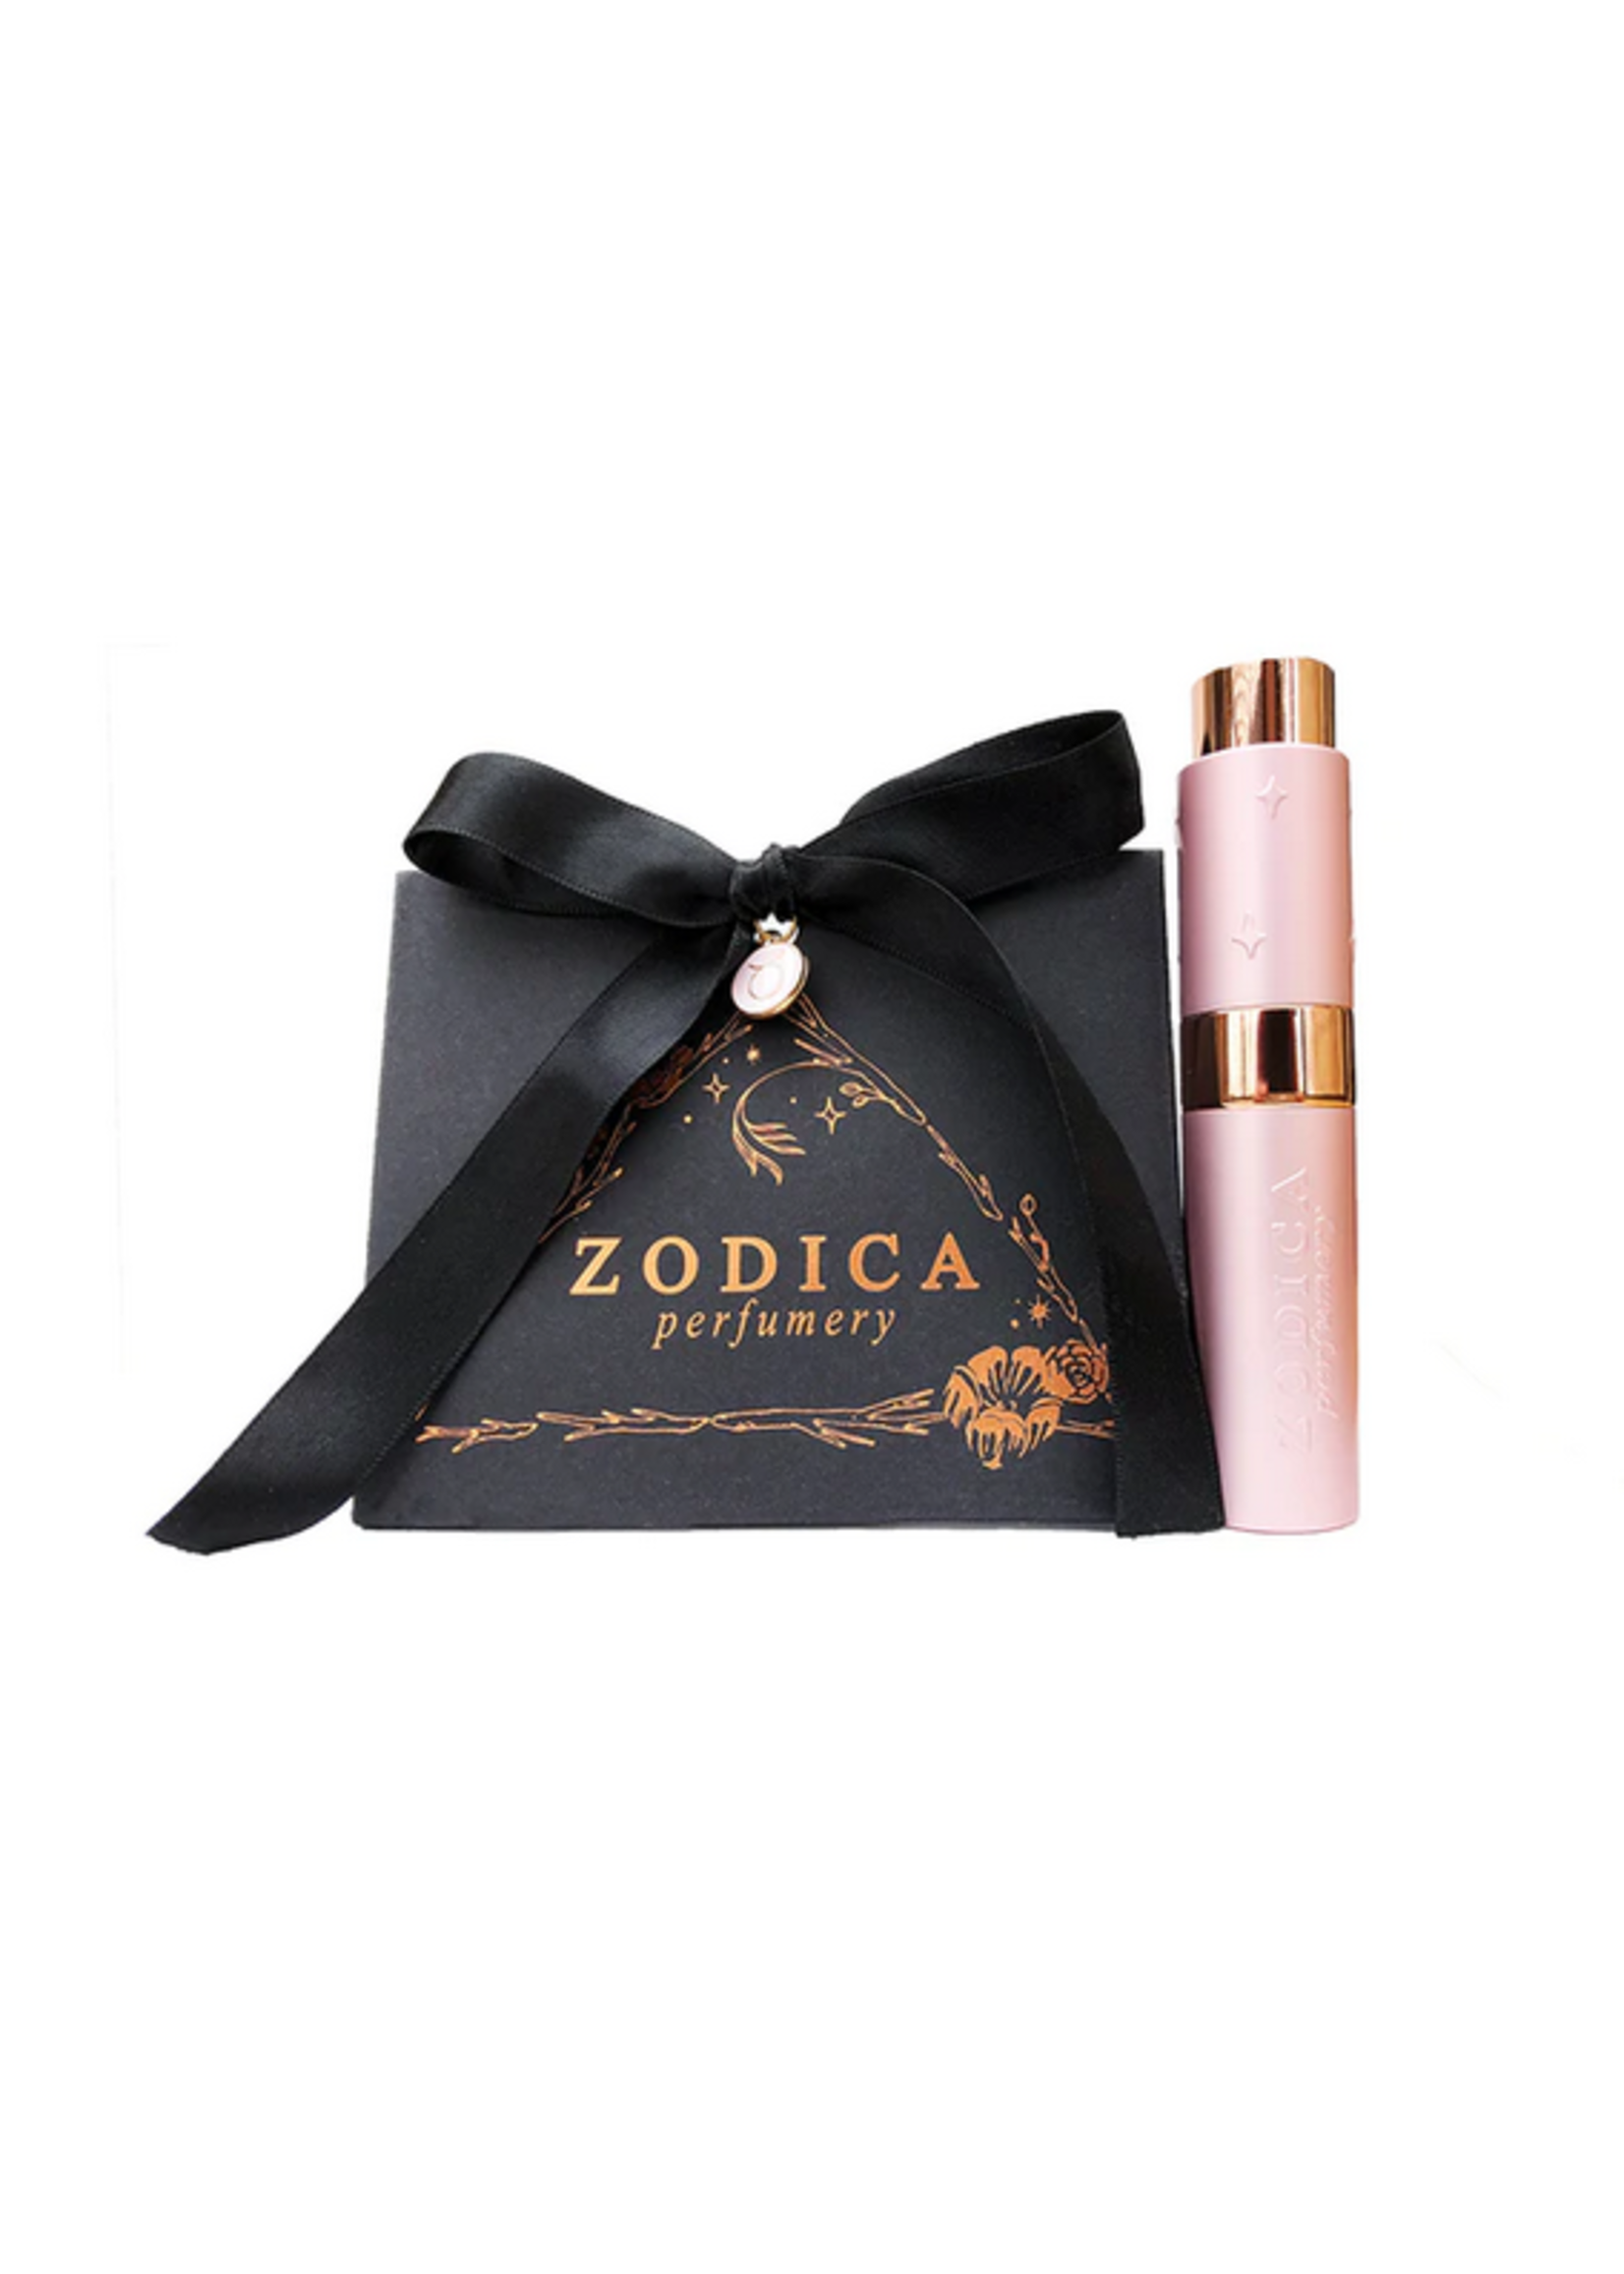 Zodica Perfume Twist & Spritz Travel Spray Gift Taurus